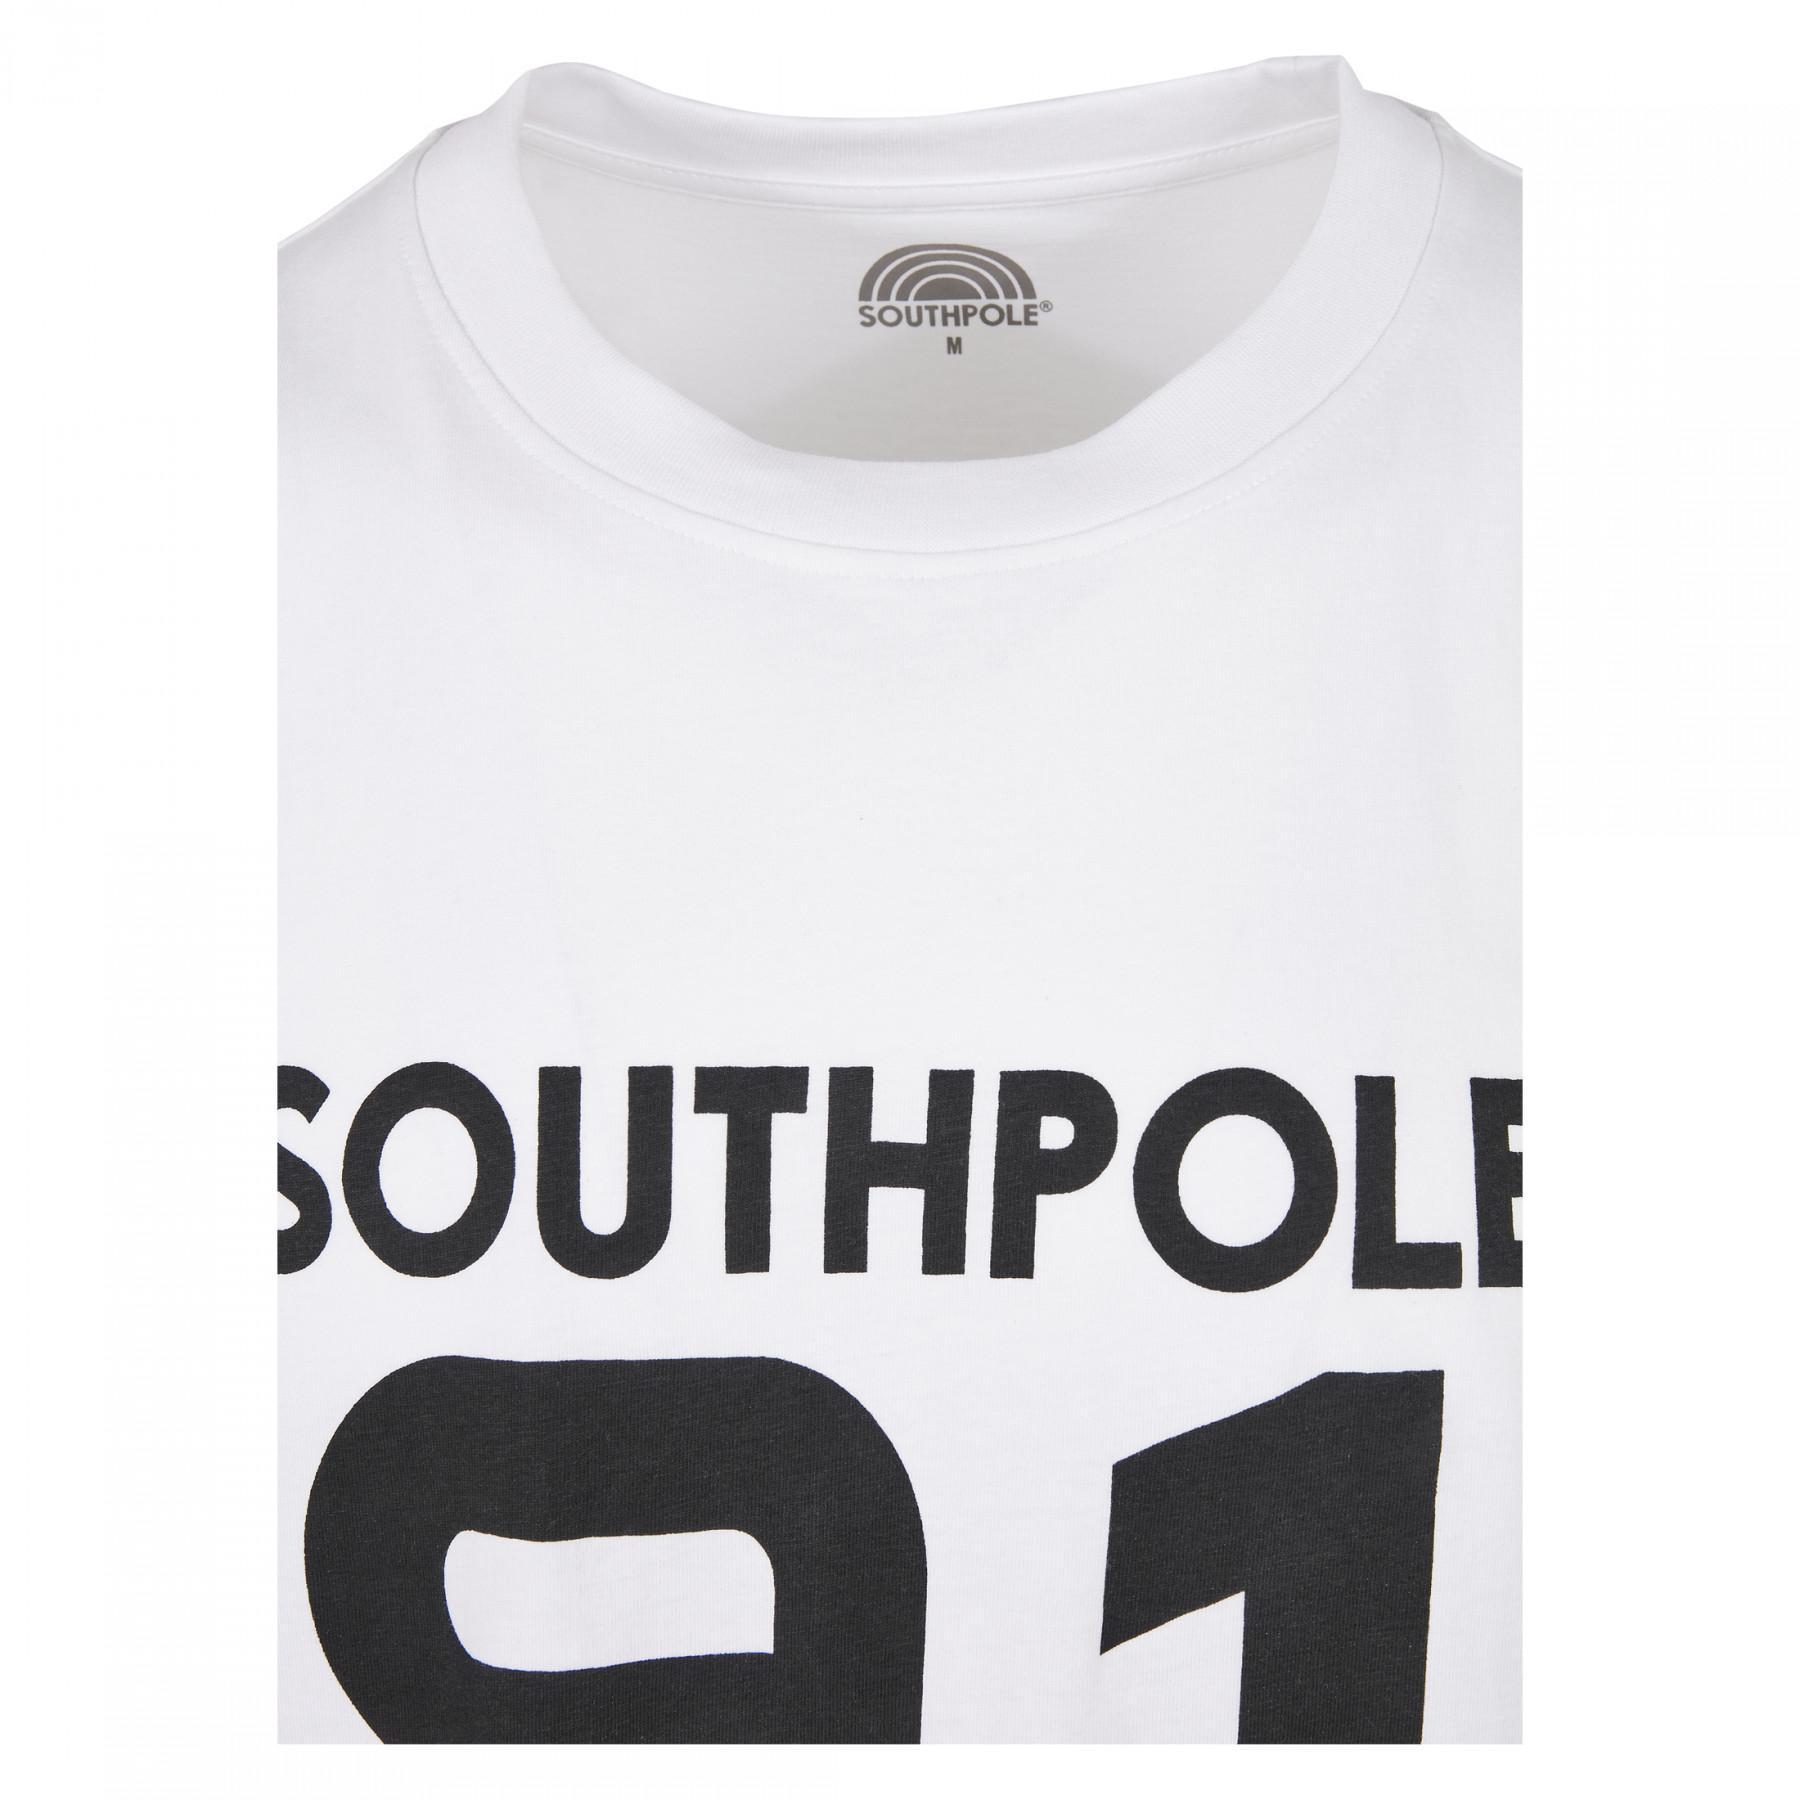 Koszulka Southpole southpole 91